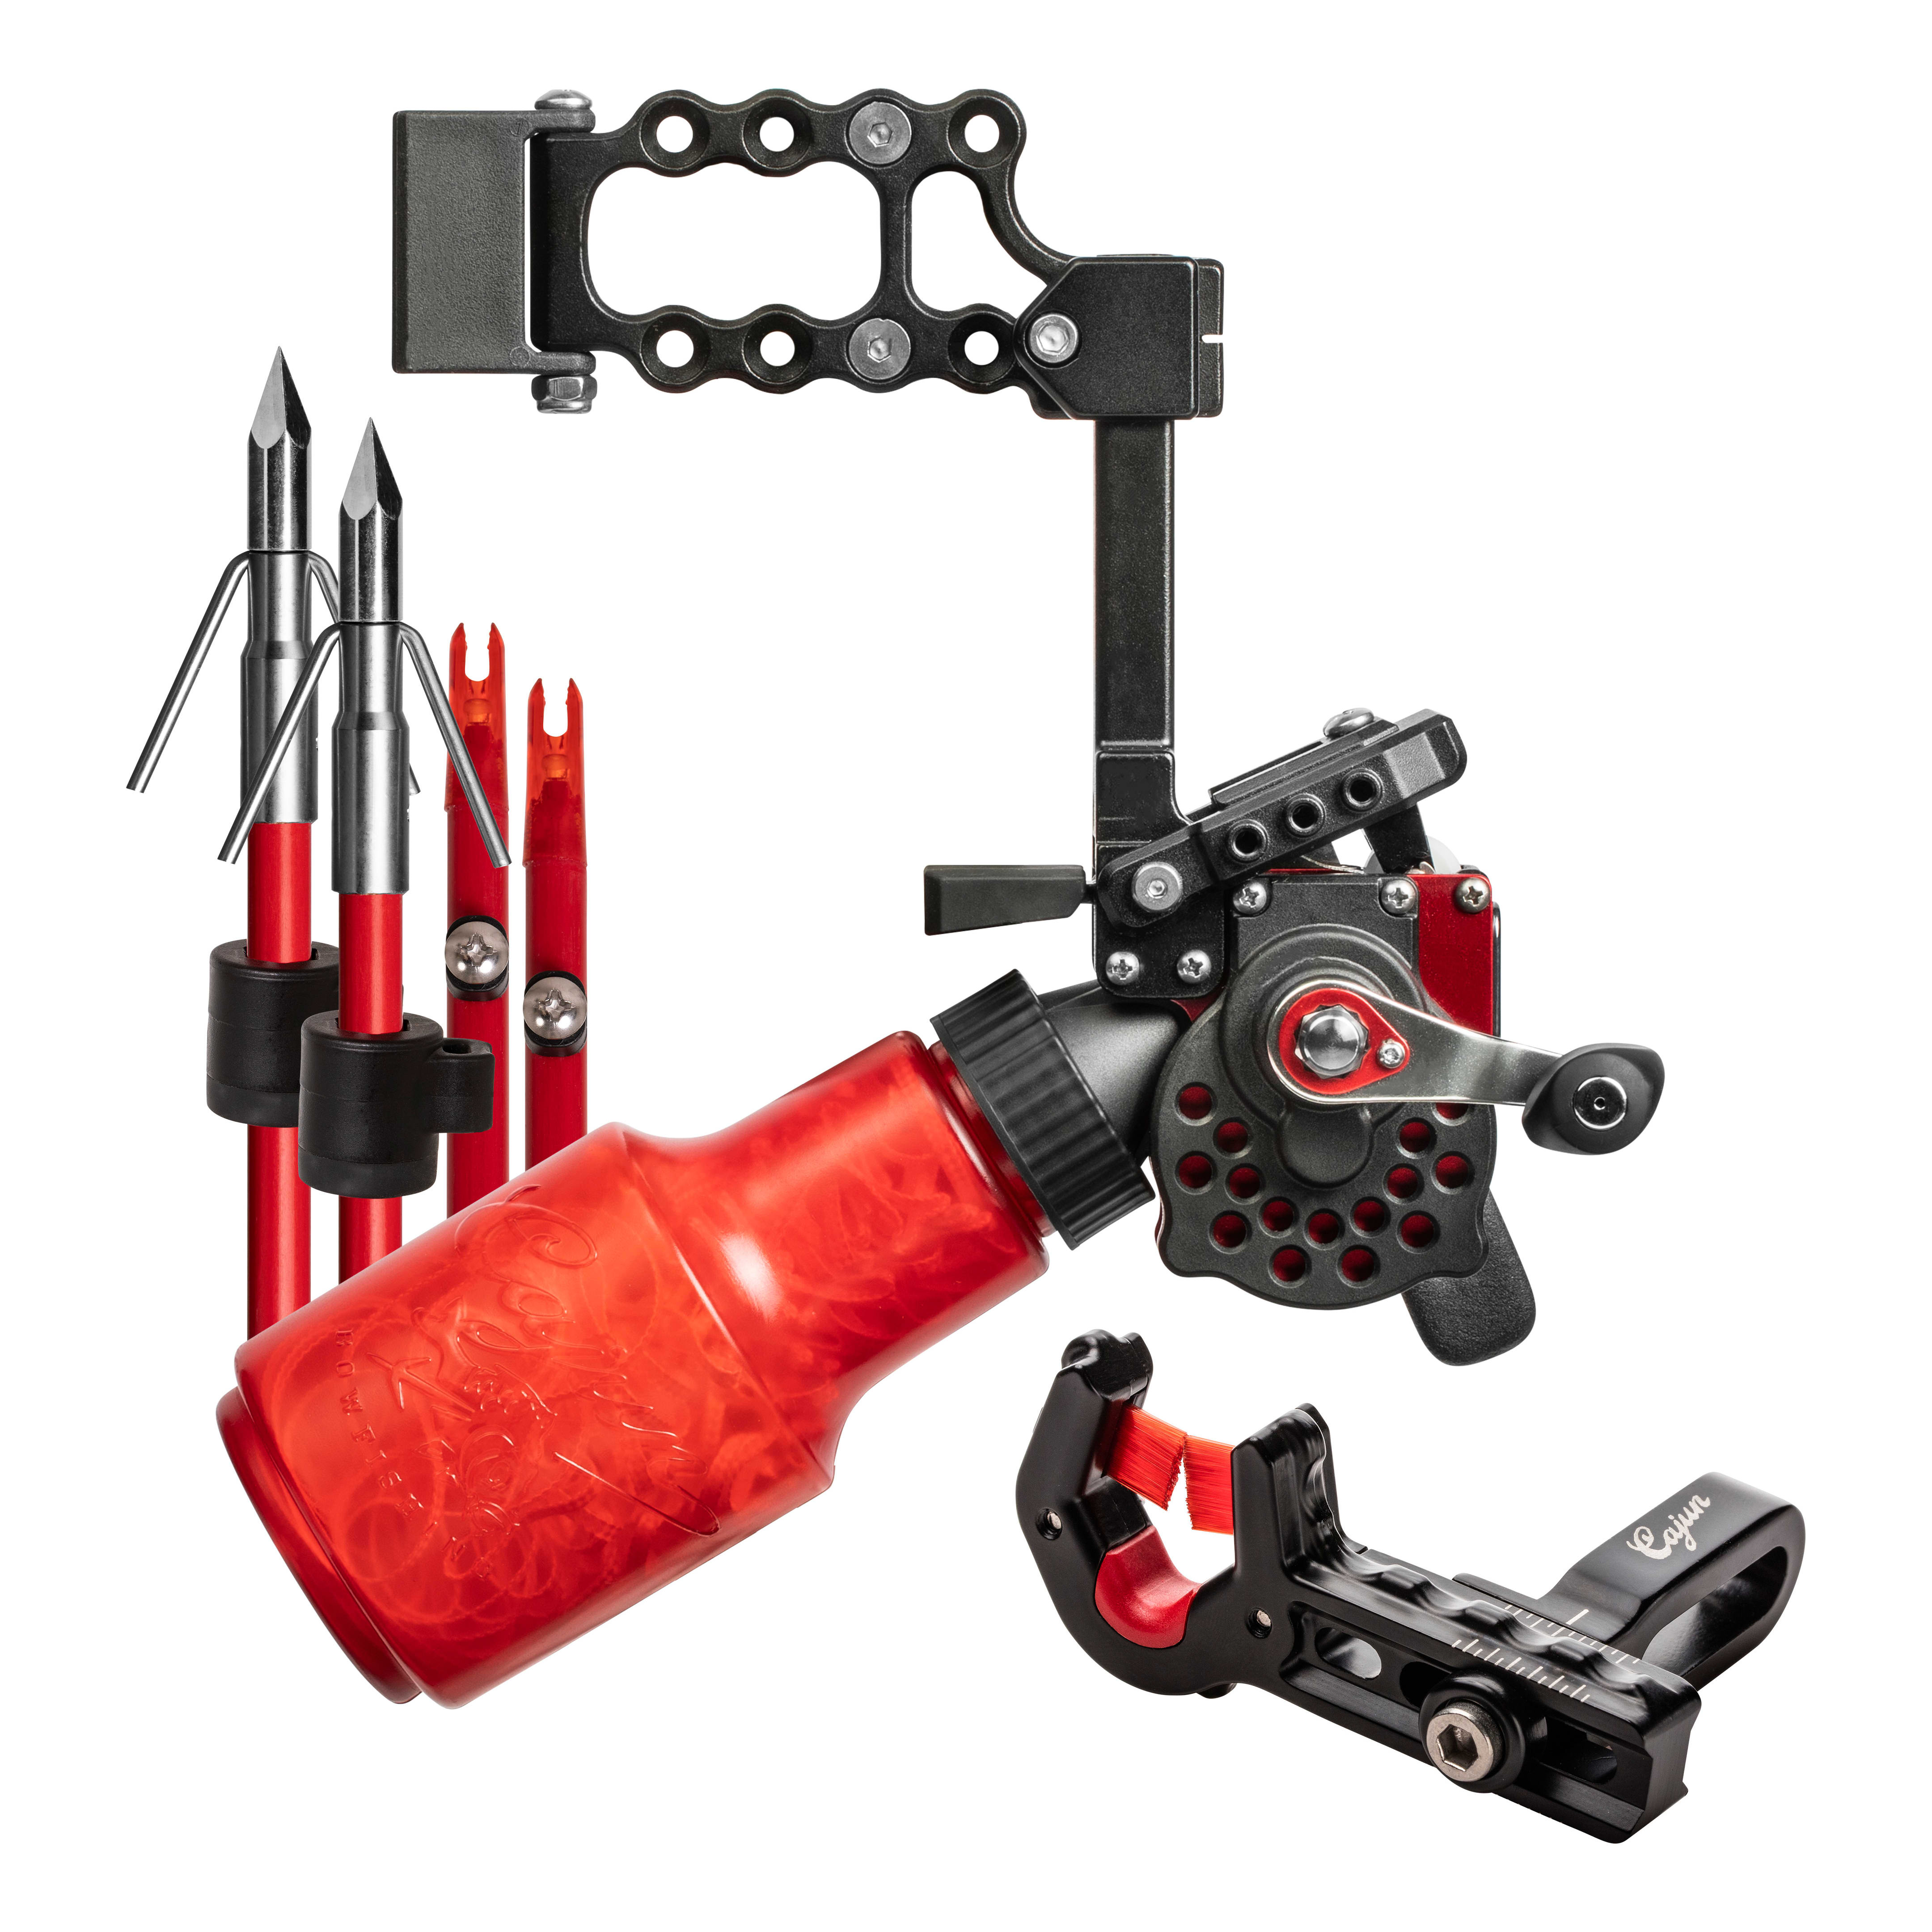 Bowfishing Supplies & Accessories: Bow Fishing Kits, Reels & Arrows